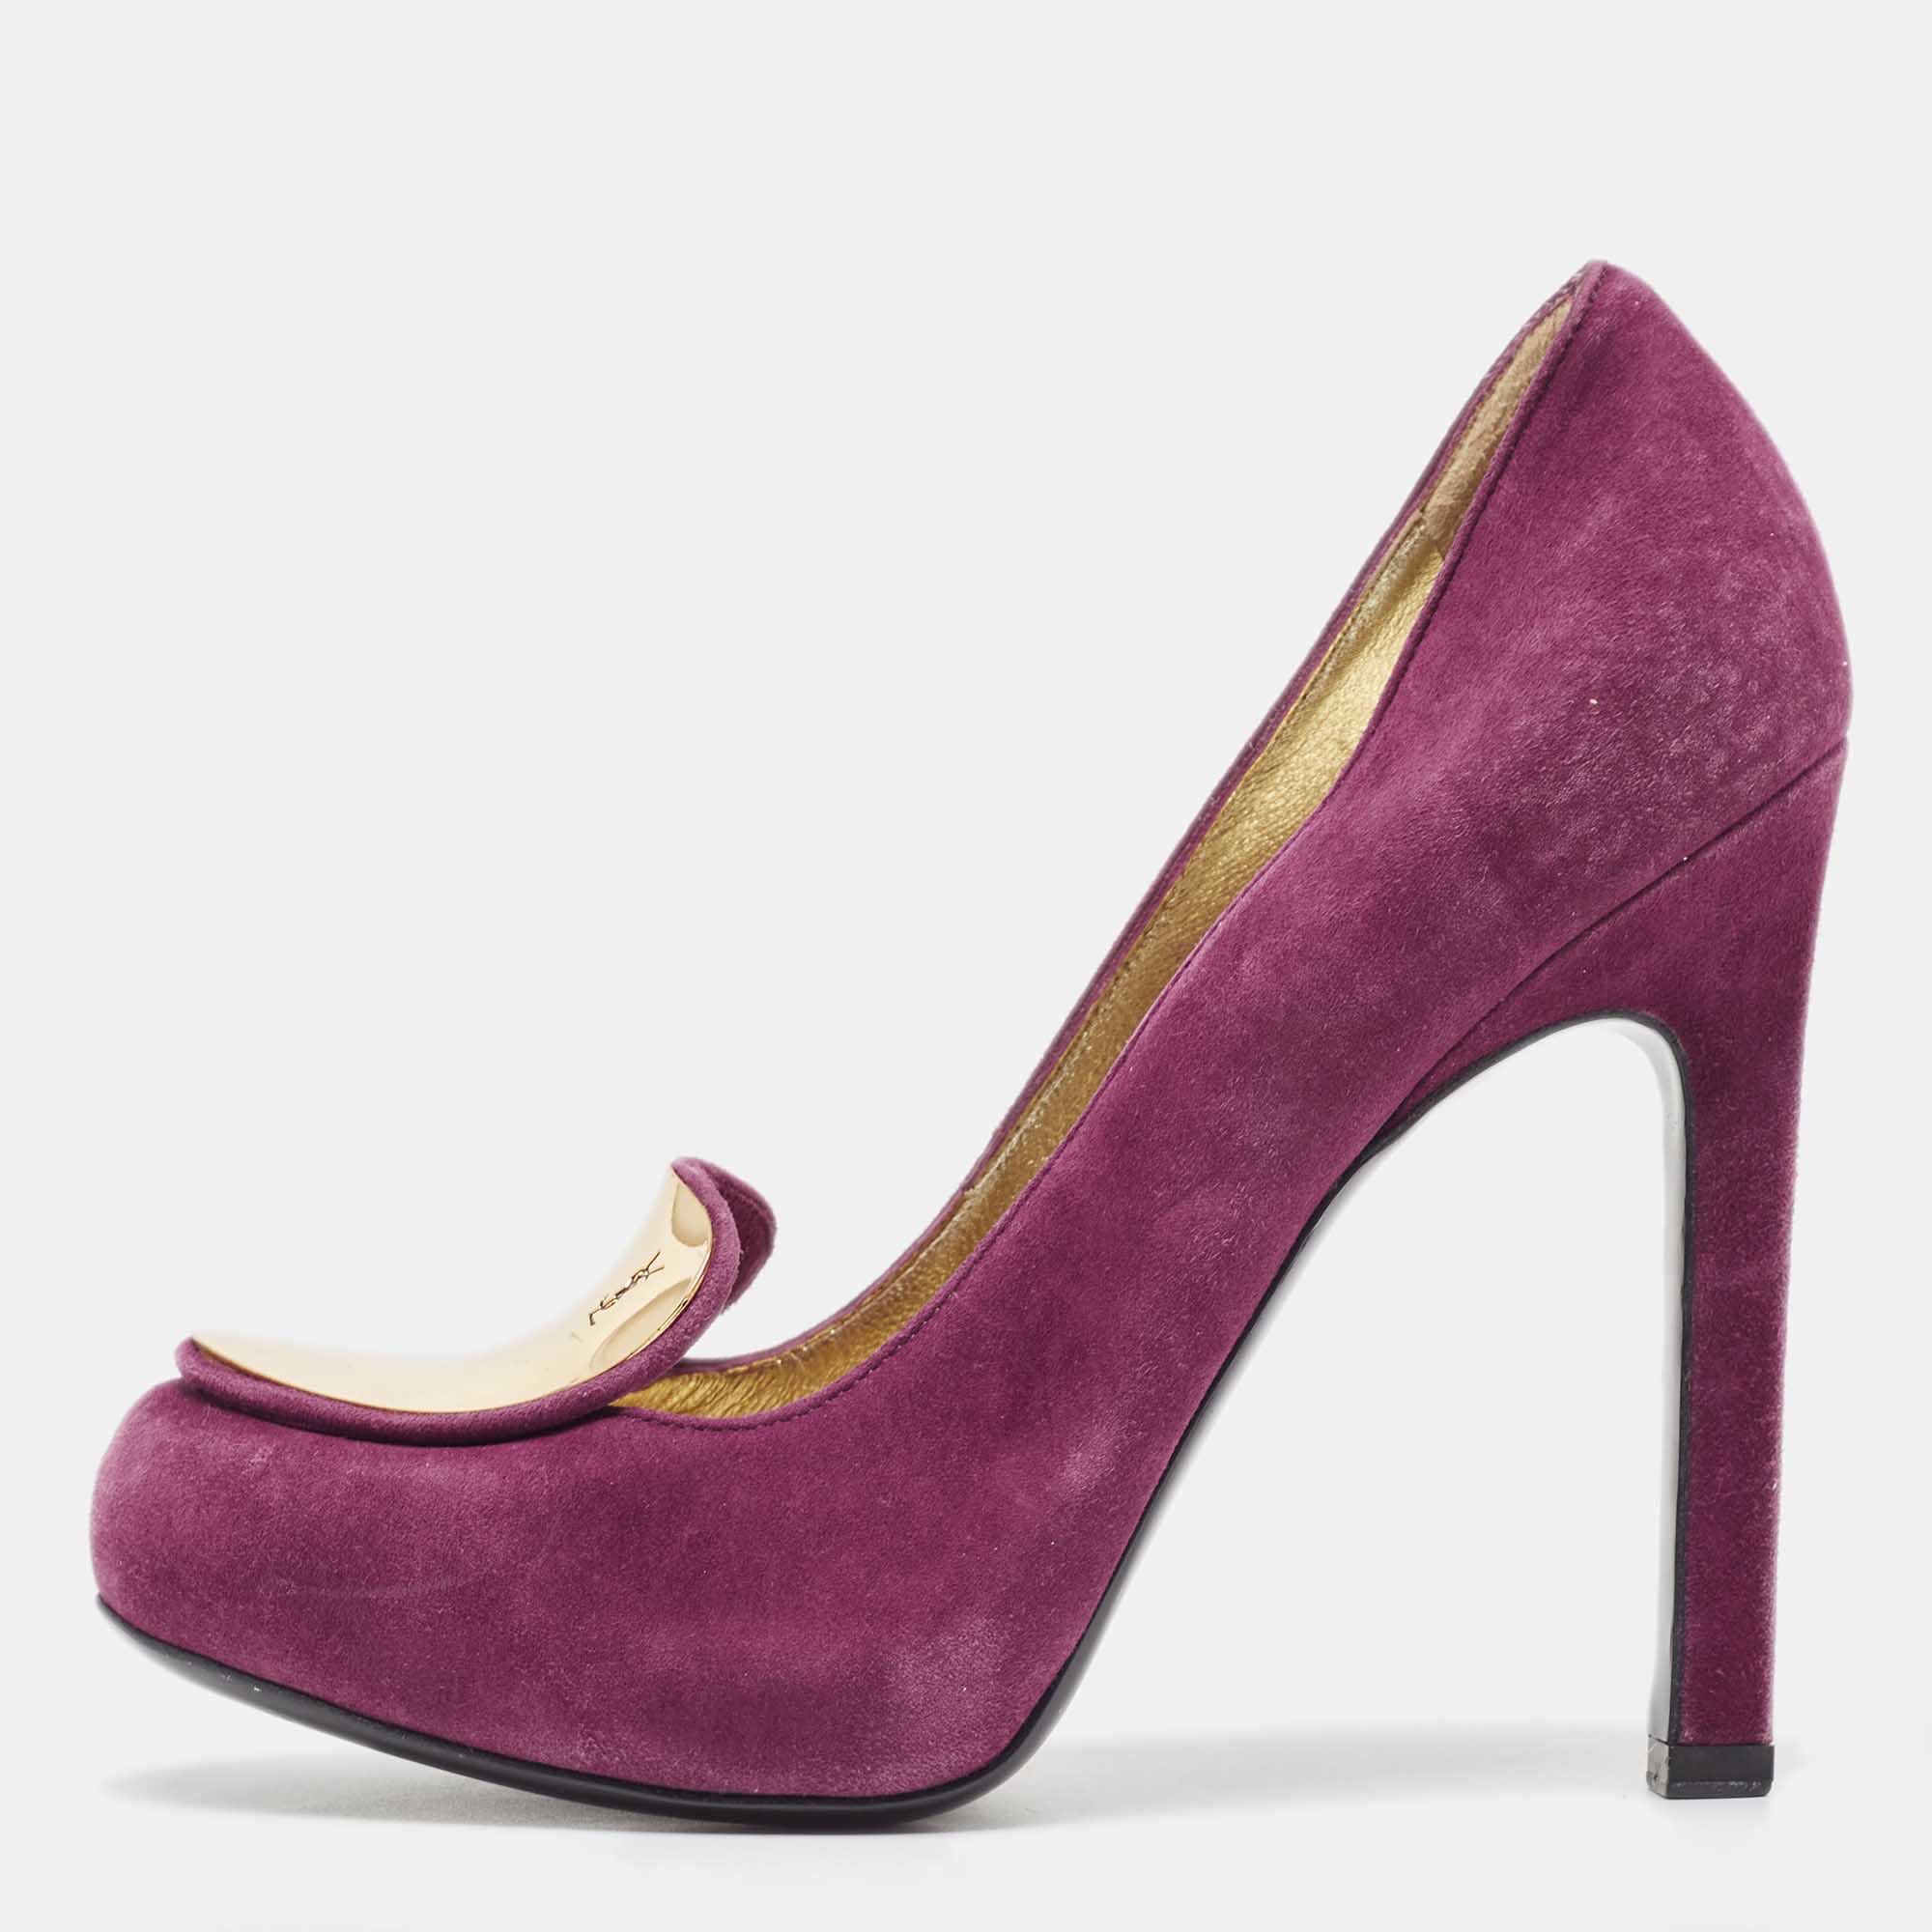 Yves saint laurent purple suede plaque embellished round toe pumps size 36.5